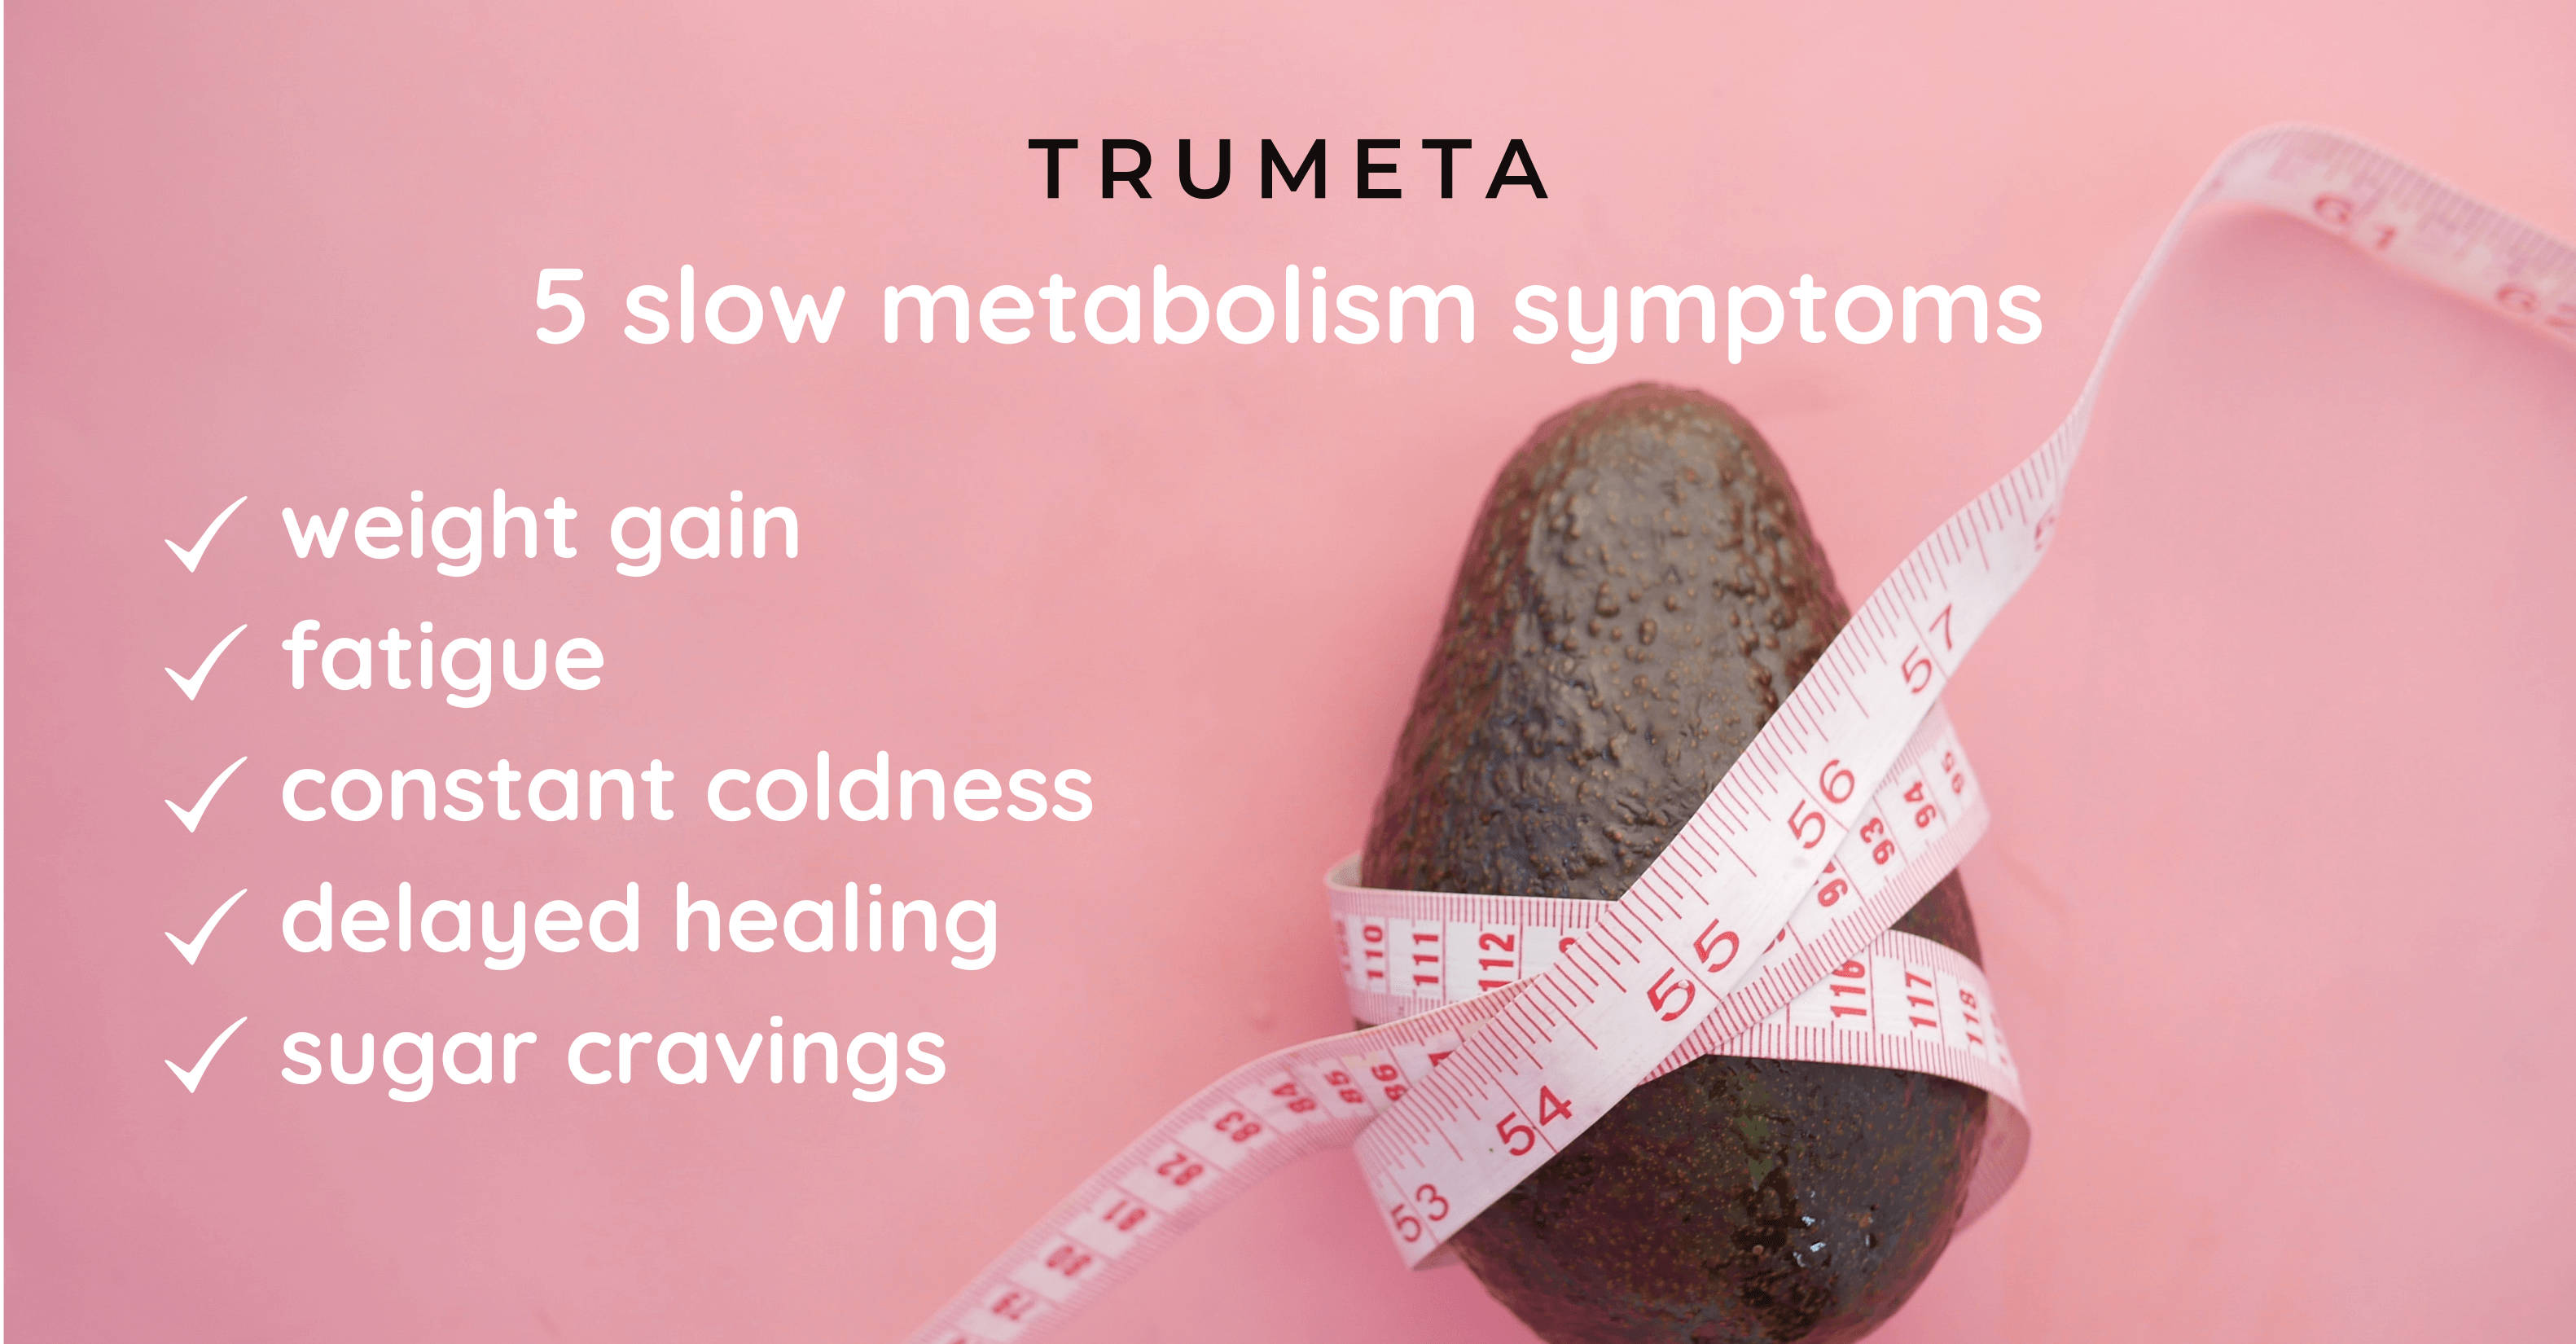 Slow metabolism symptom infographic